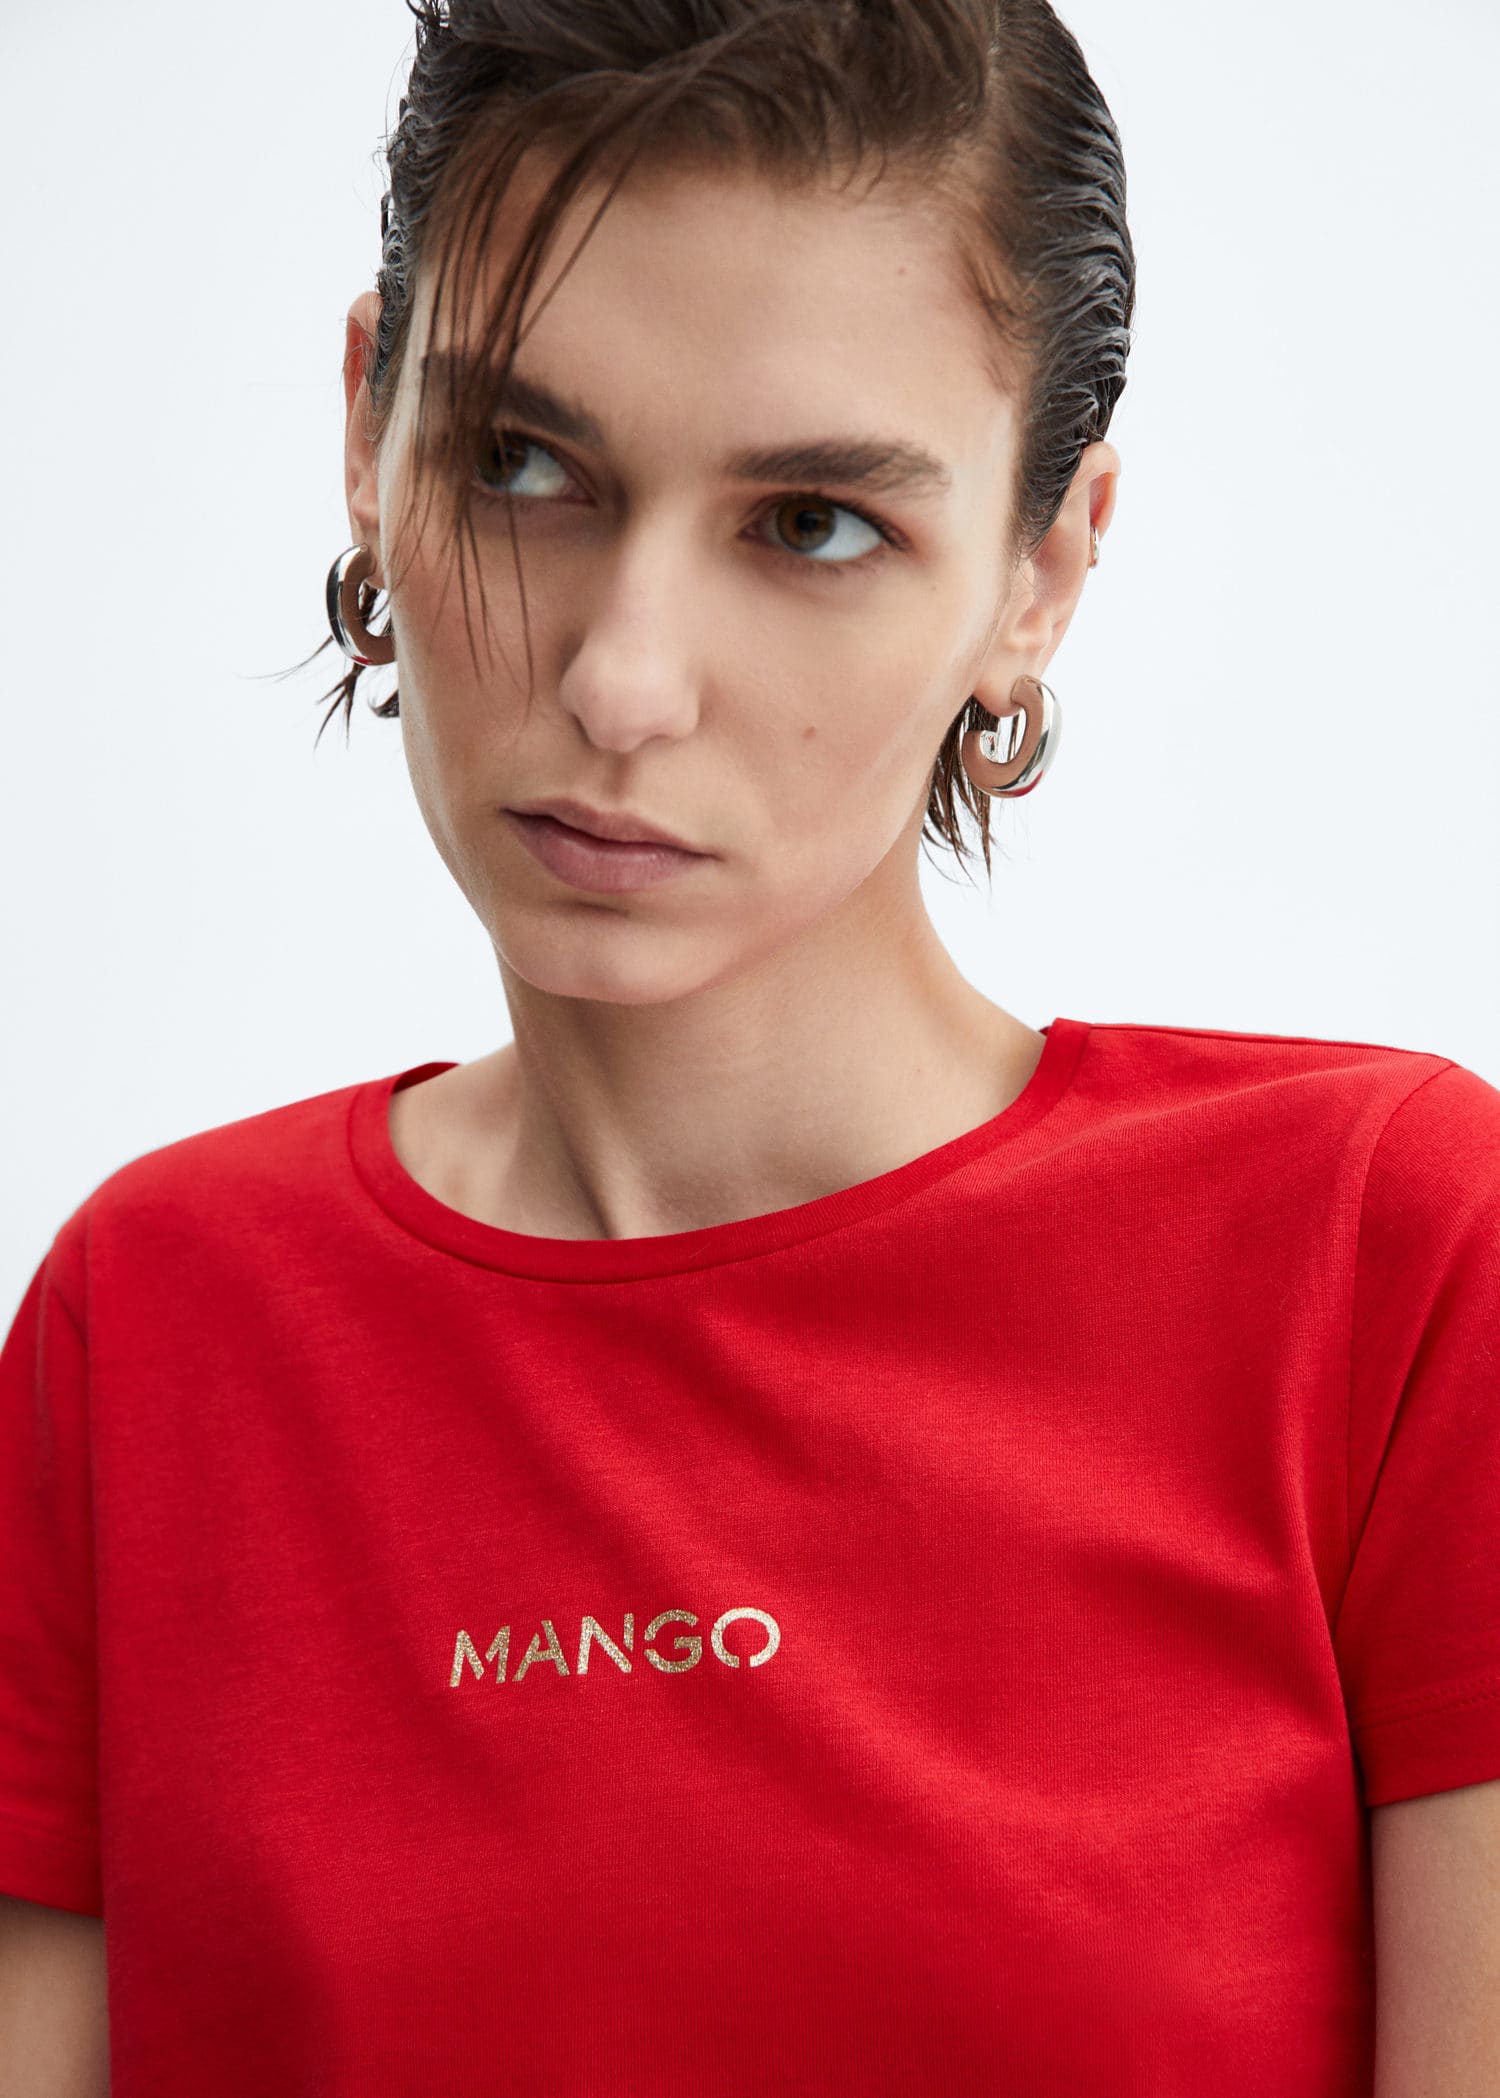 MANGO MANGOLOG-H 67010426-70 MANGO WOMEN T-SHIRT SHORT SLEEVE